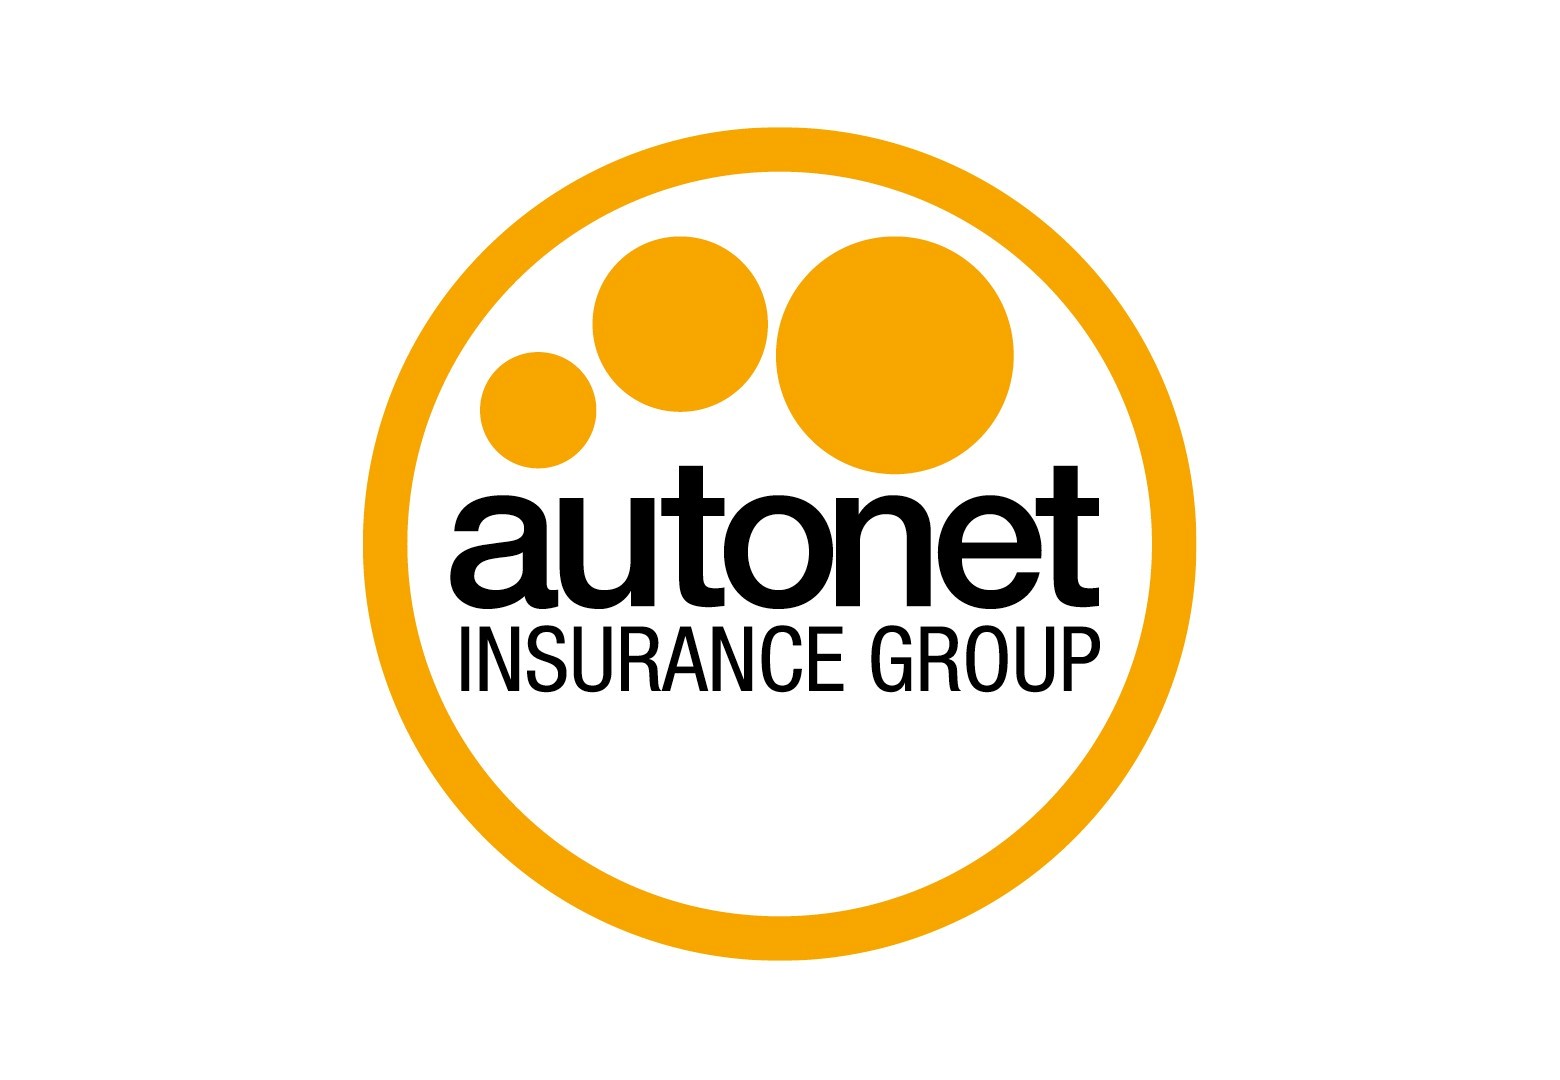 Autonet Insurance logo.